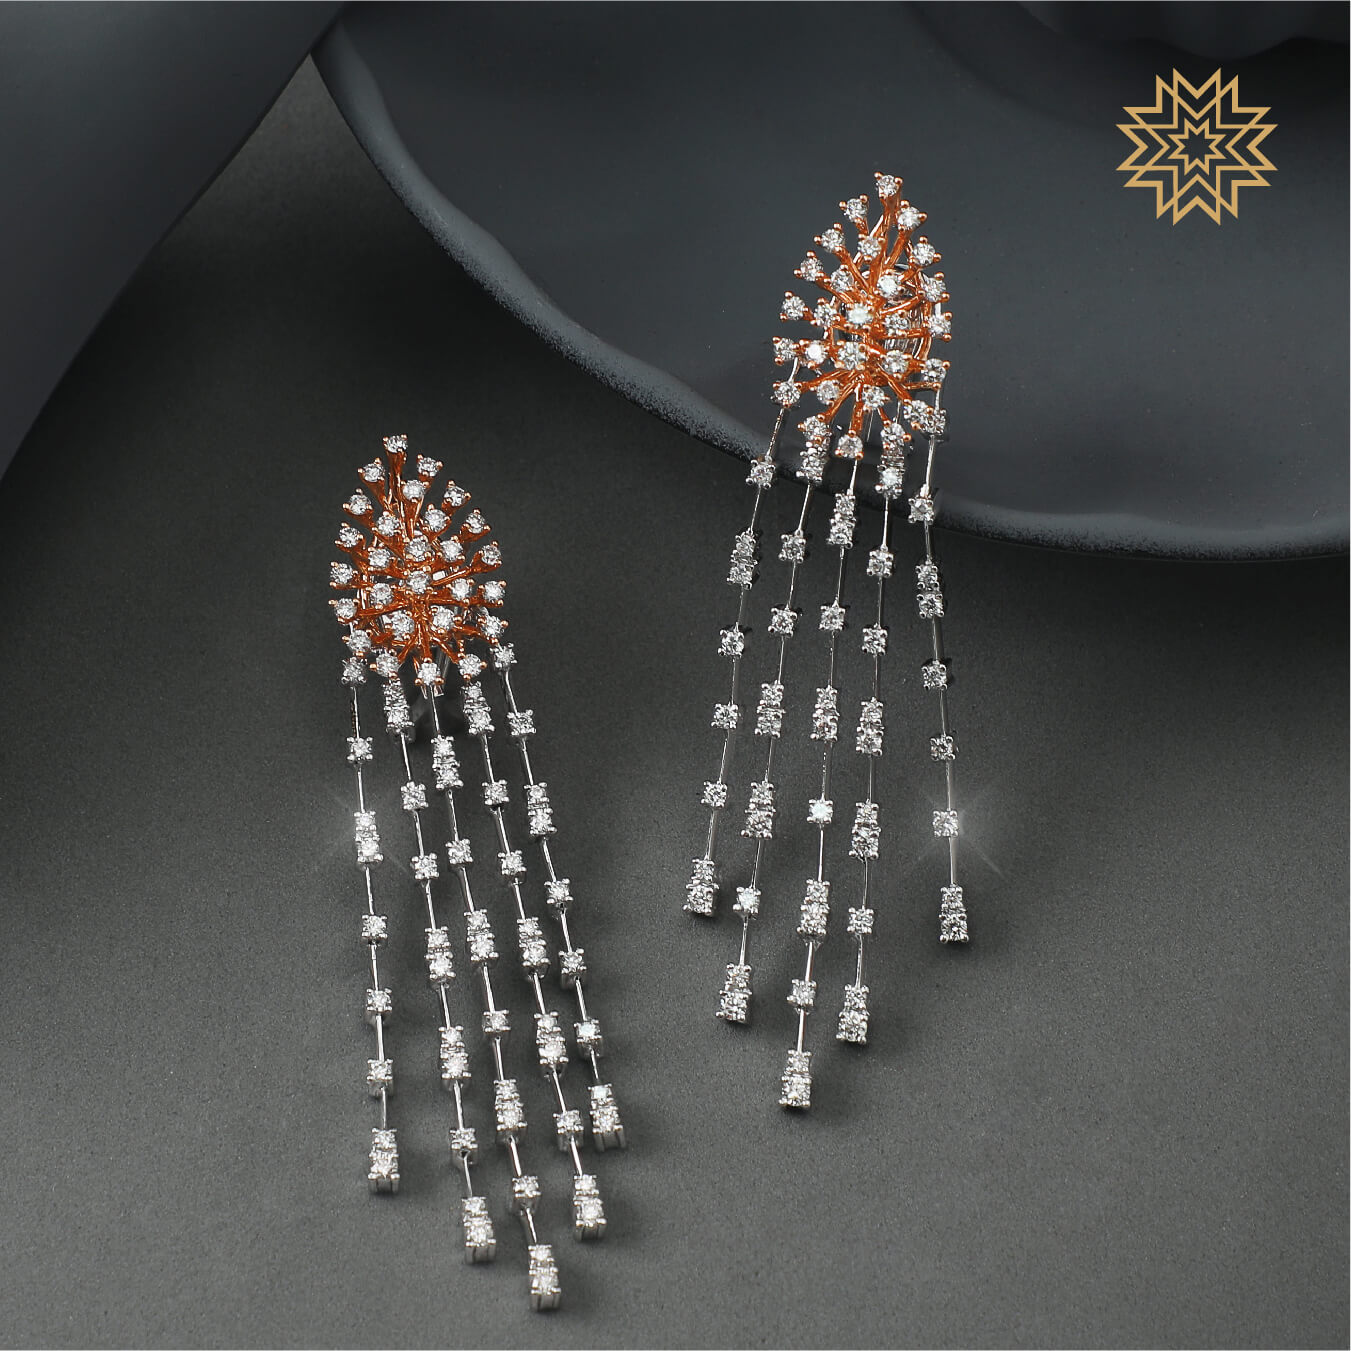 Manubhai Real Diamond Earrings